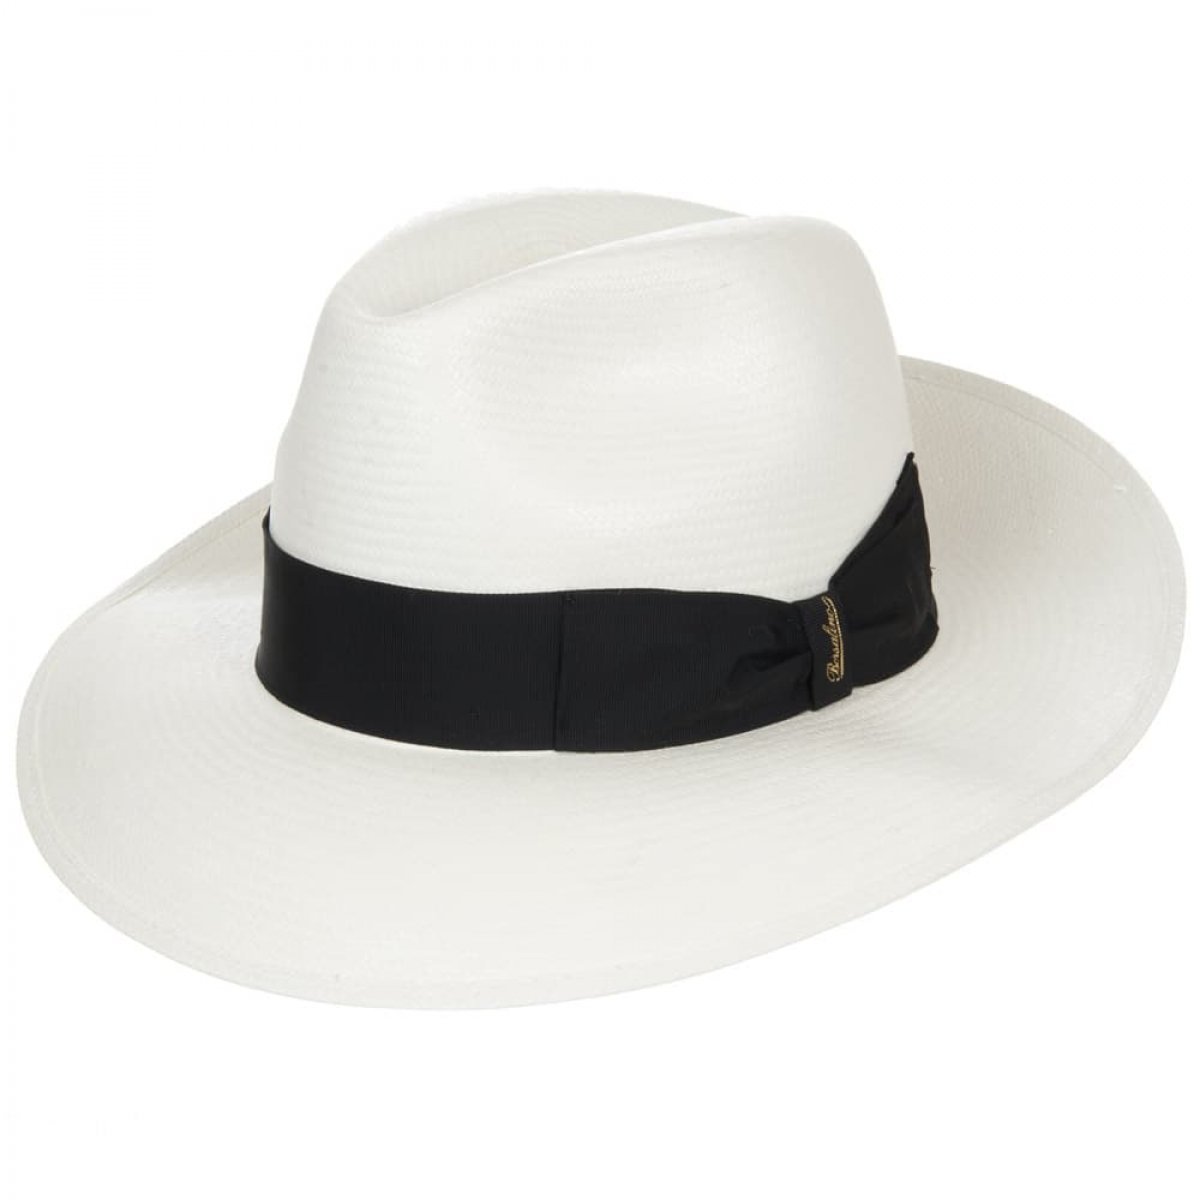 top quality Panama hat by Borsalino